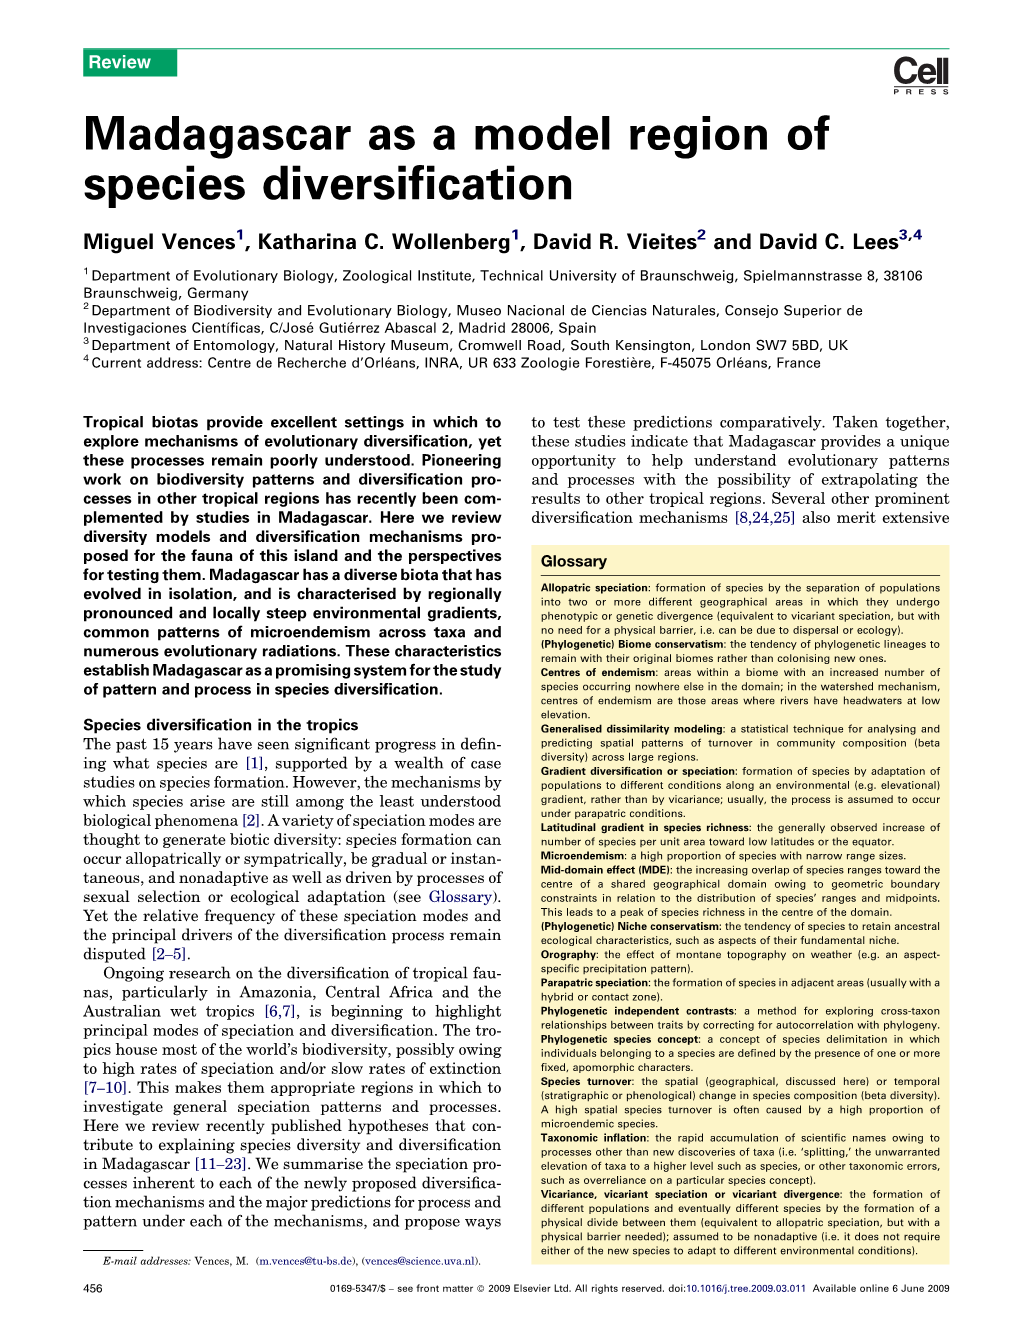 Madagascar As a Model Region of Species Diversification Miguel Vences1, Katharina C